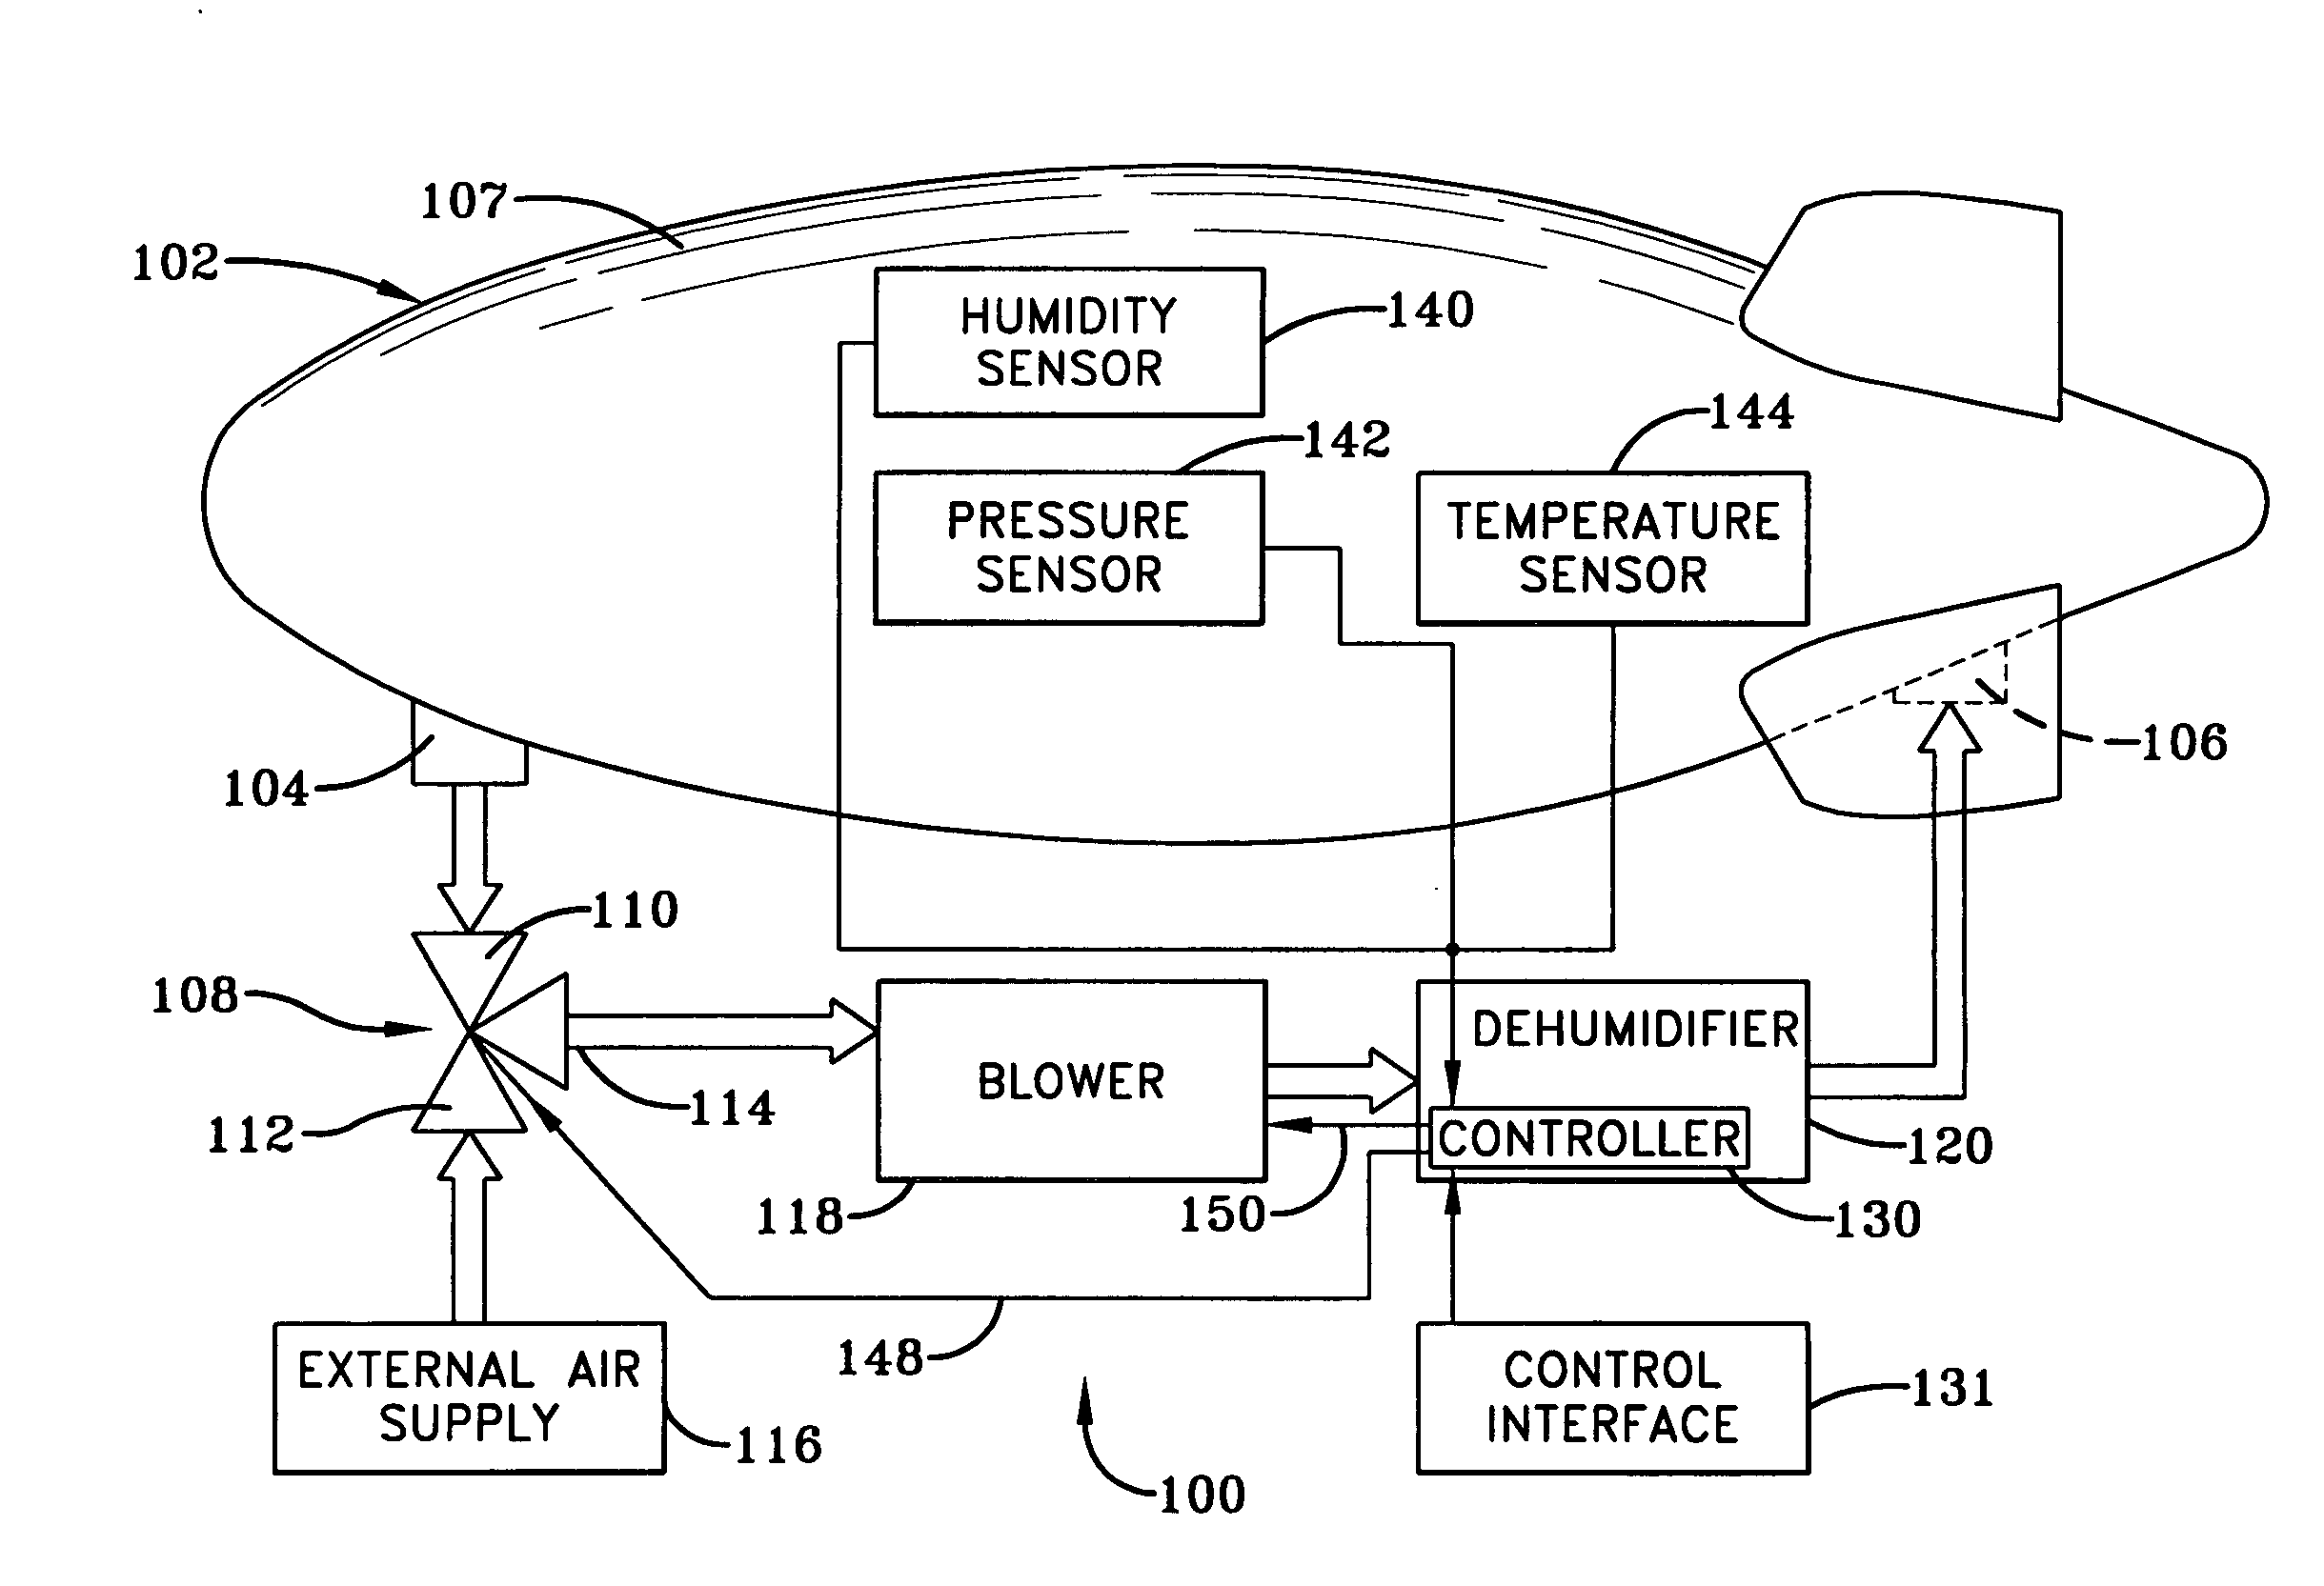 Dehumidification system for an airship